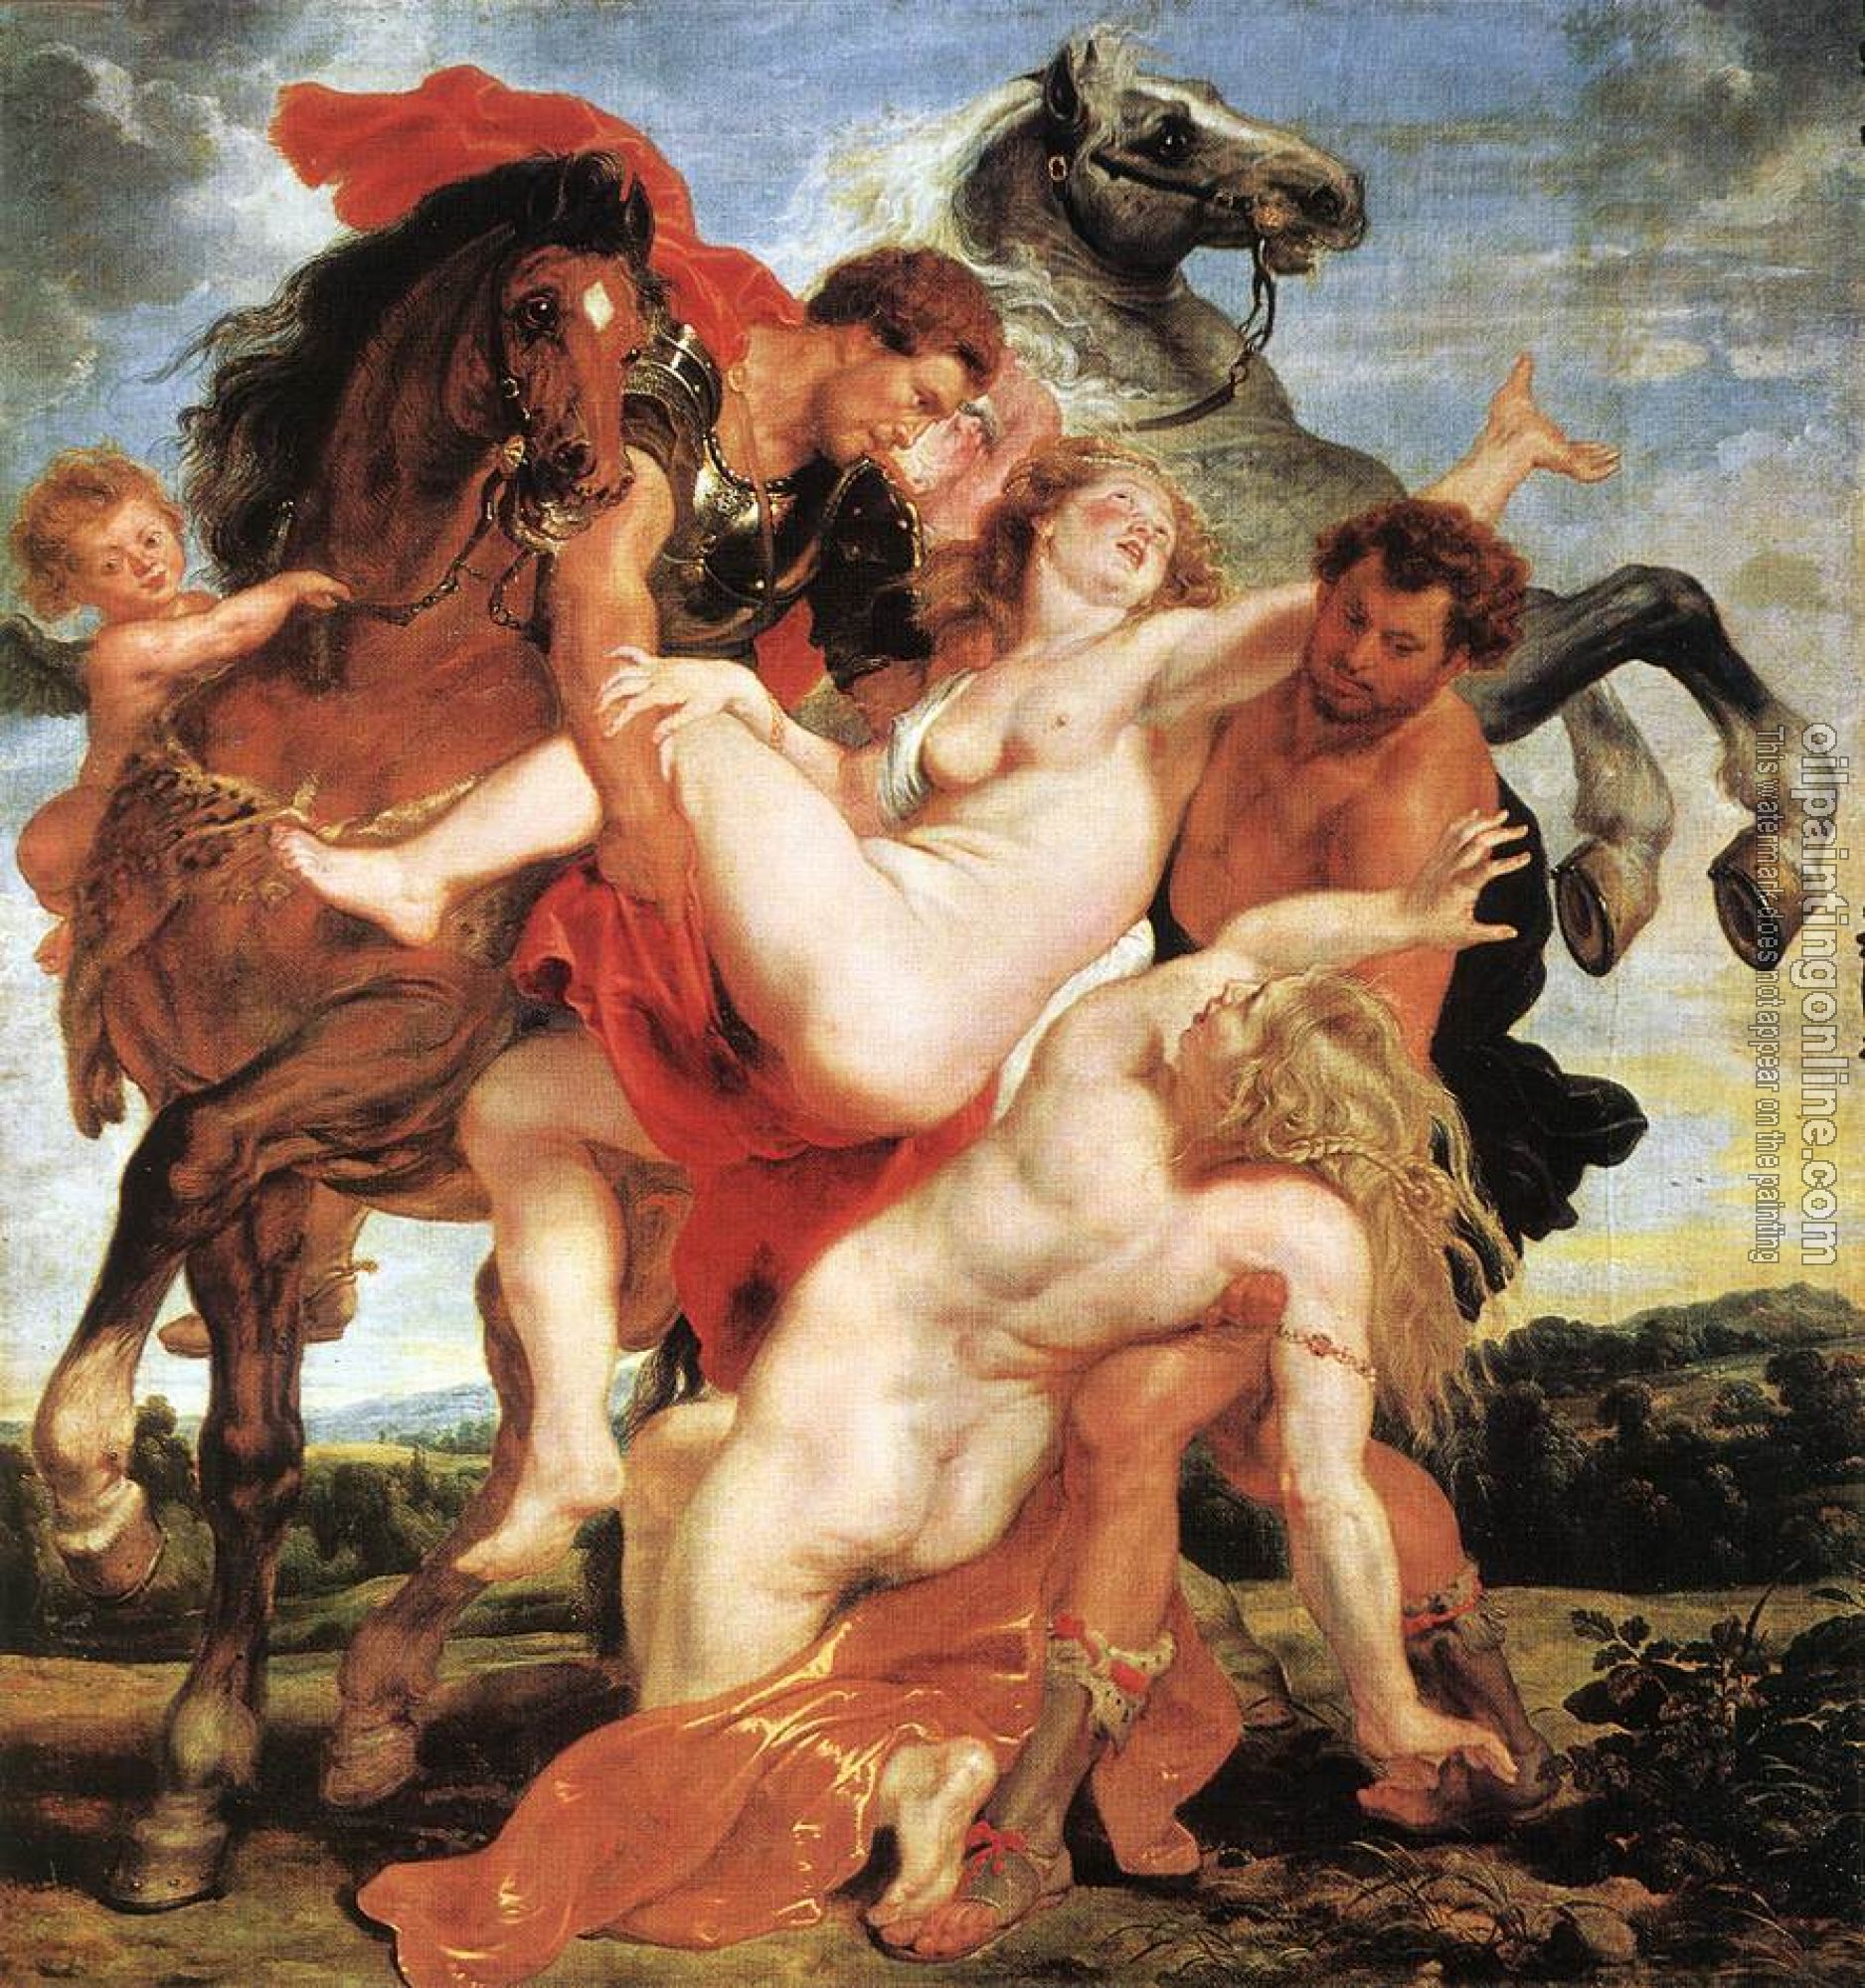 Rubens, Peter Paul - Rape of the Daughters of Leucippus